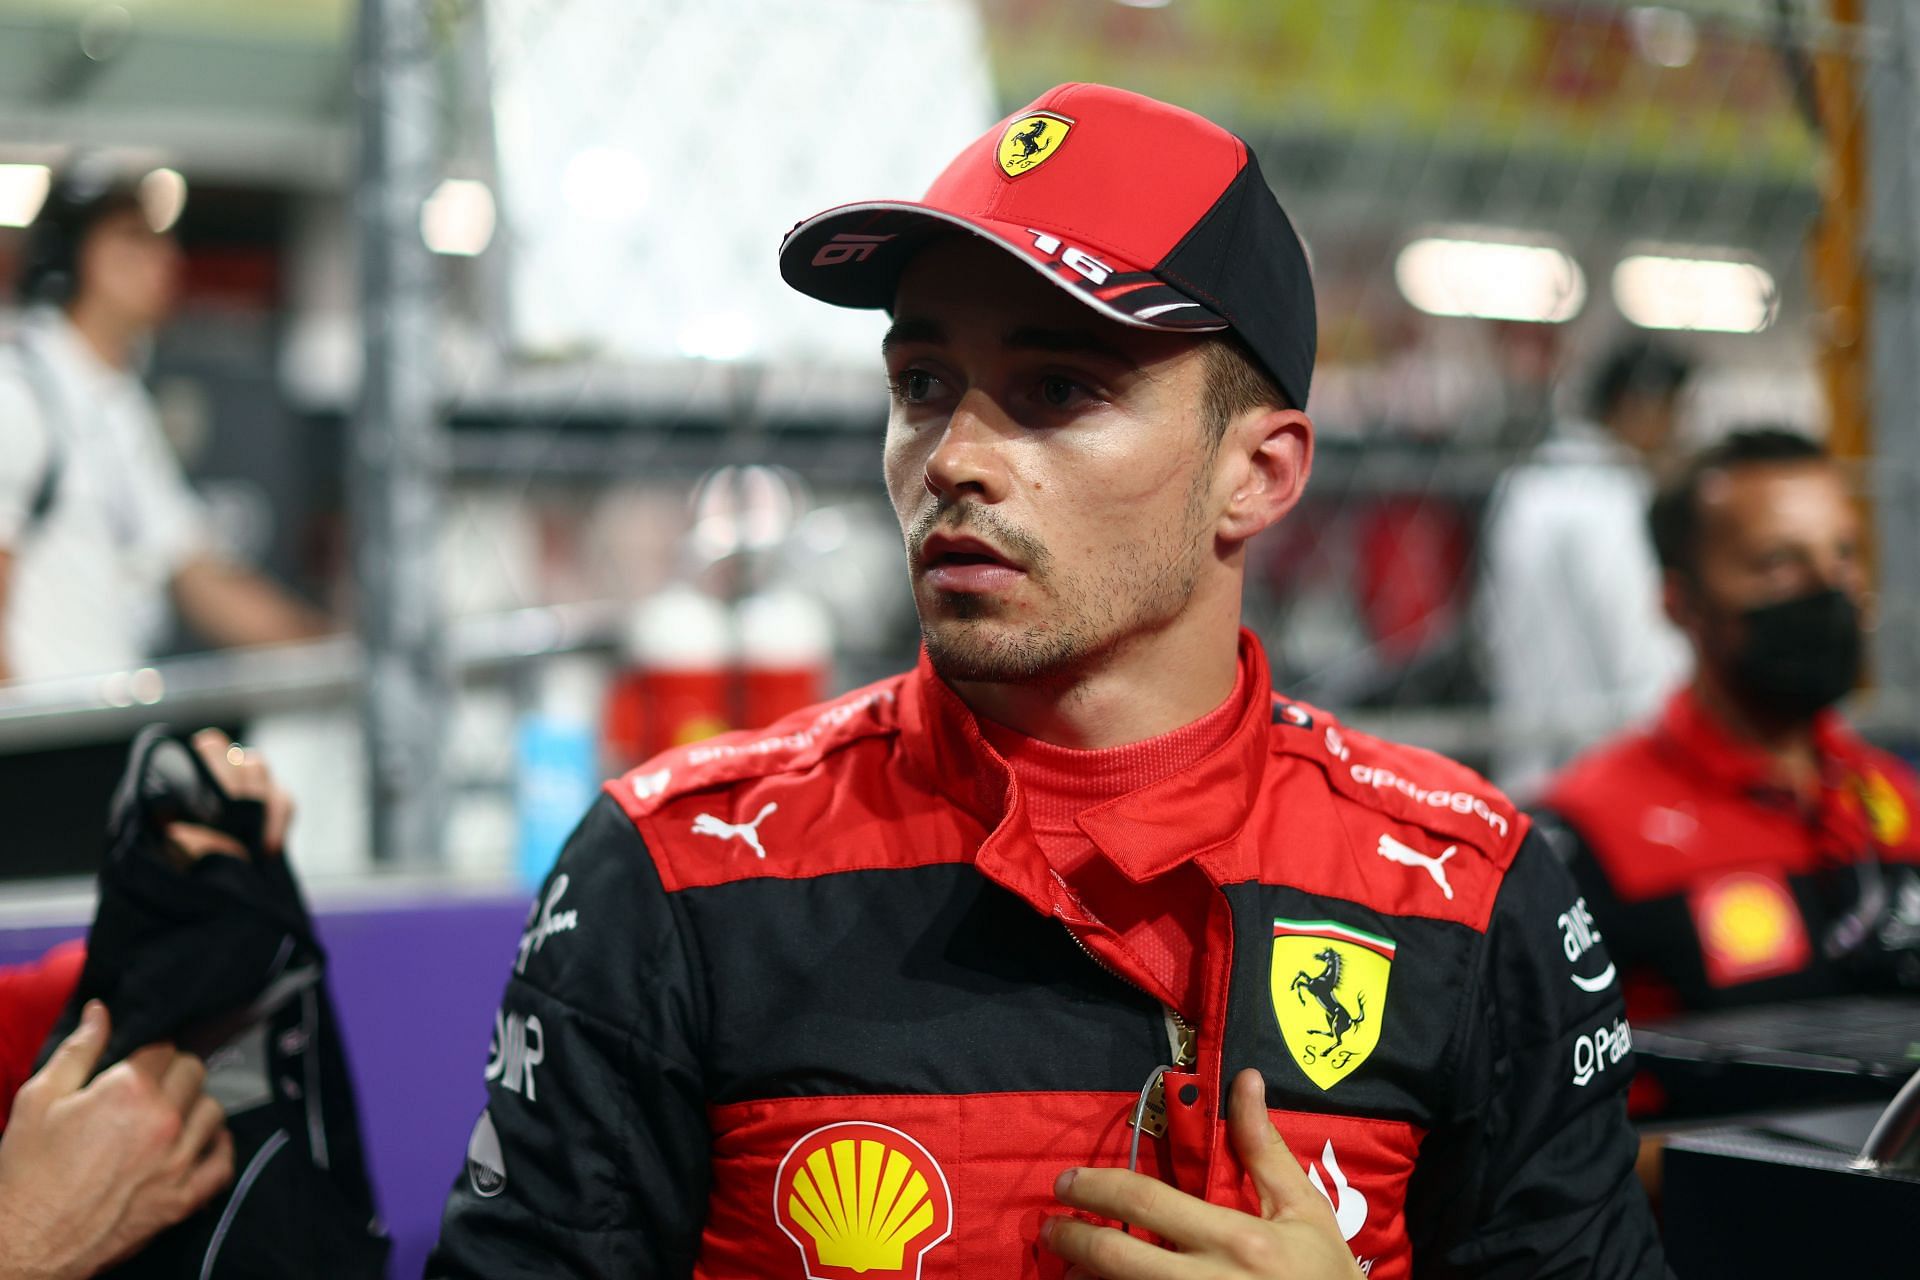 Charles Leclerc at the F1 Grand Prix of Saudi Arabia